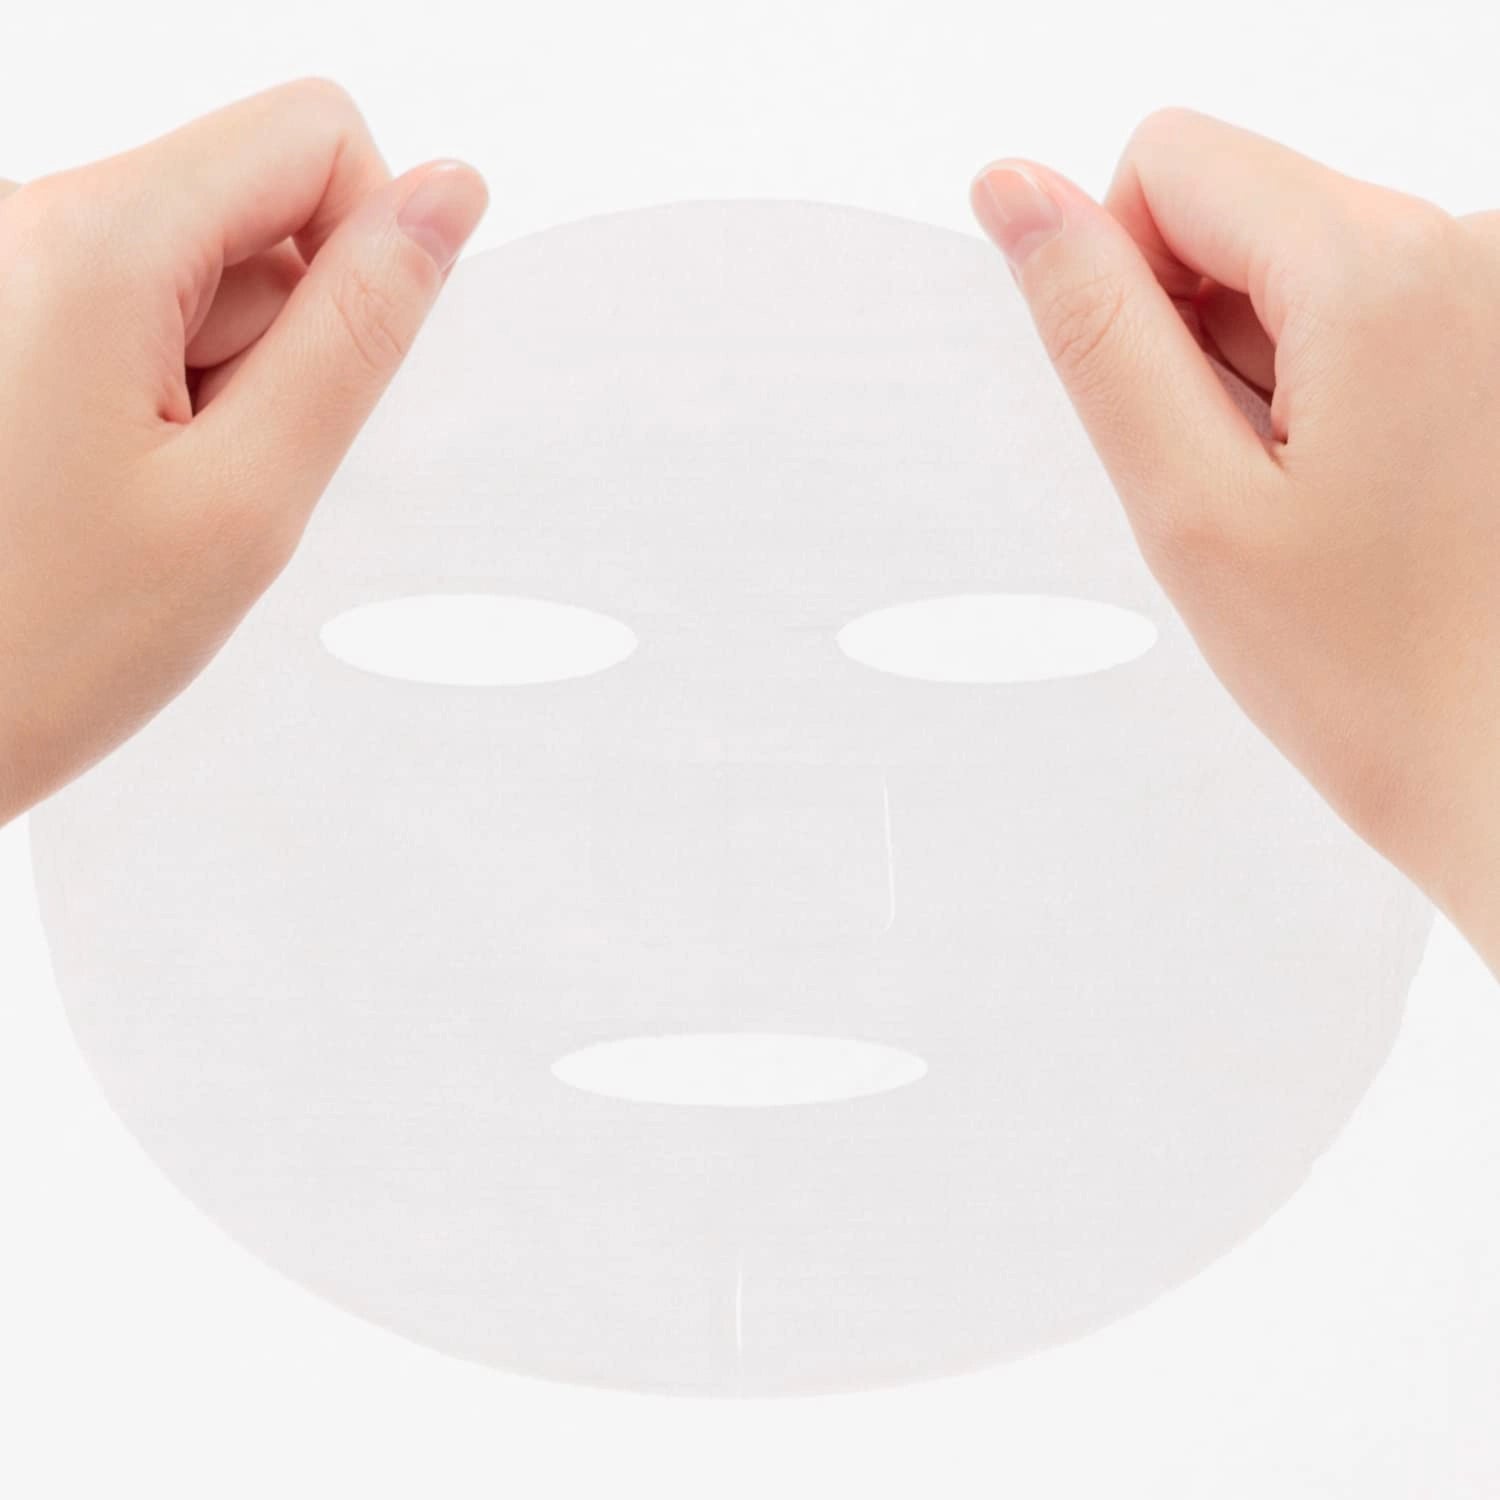 Kose Clear Turn Rice Cica Moist Skincare Masks 40 Sheets - Buy Me Japan